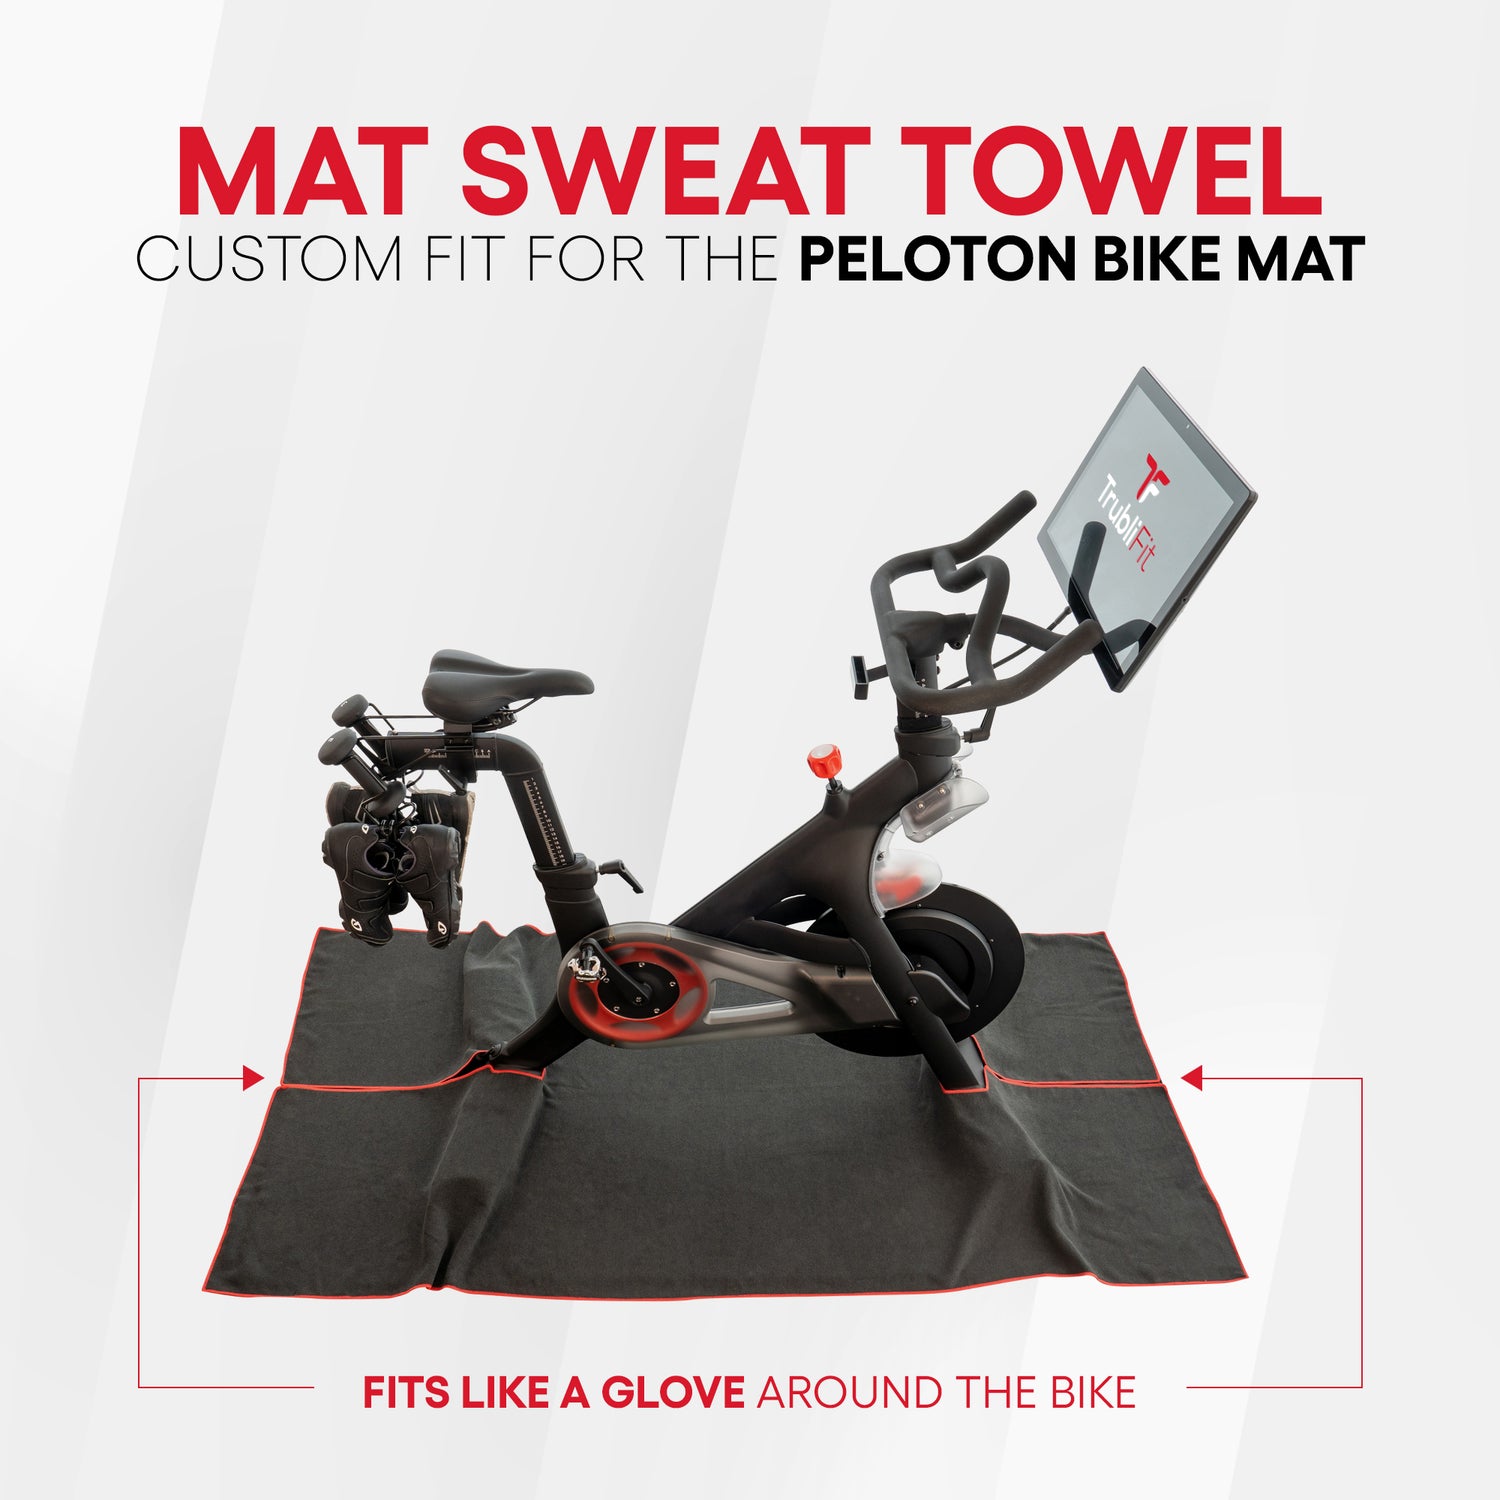 Mat Sweat Towel for The Peloton Bike & Bike+ Accessories for Peloton –  TrubliFit